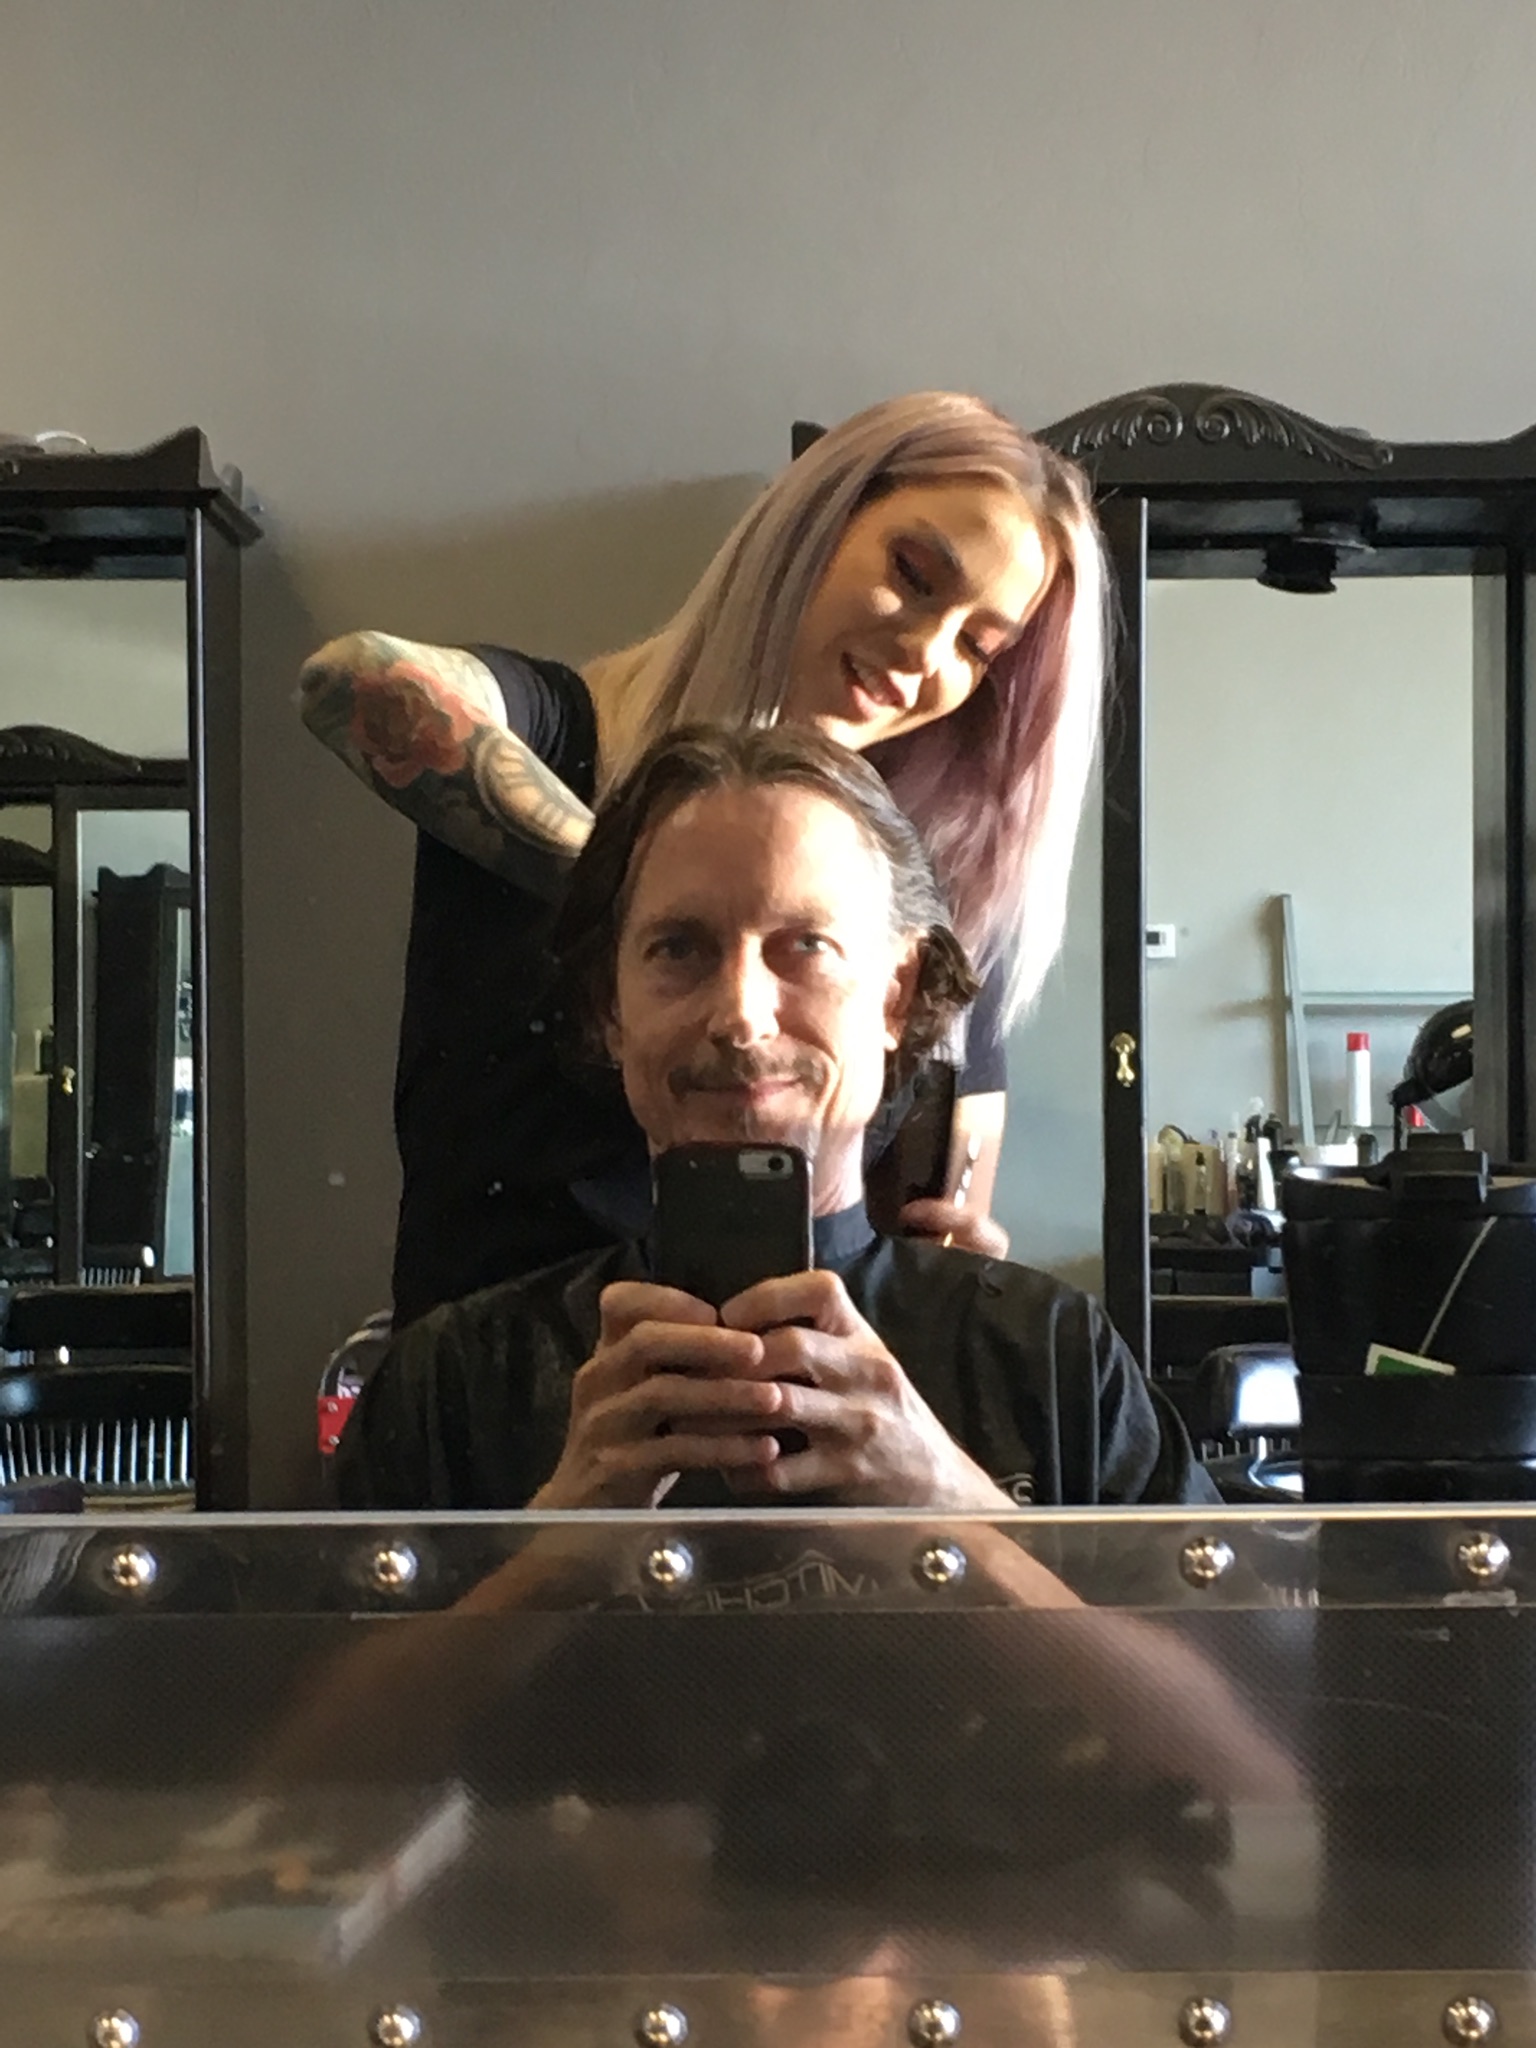 Allan Sturm getting his haircut by Alexis Nicole in Tucson Arizona